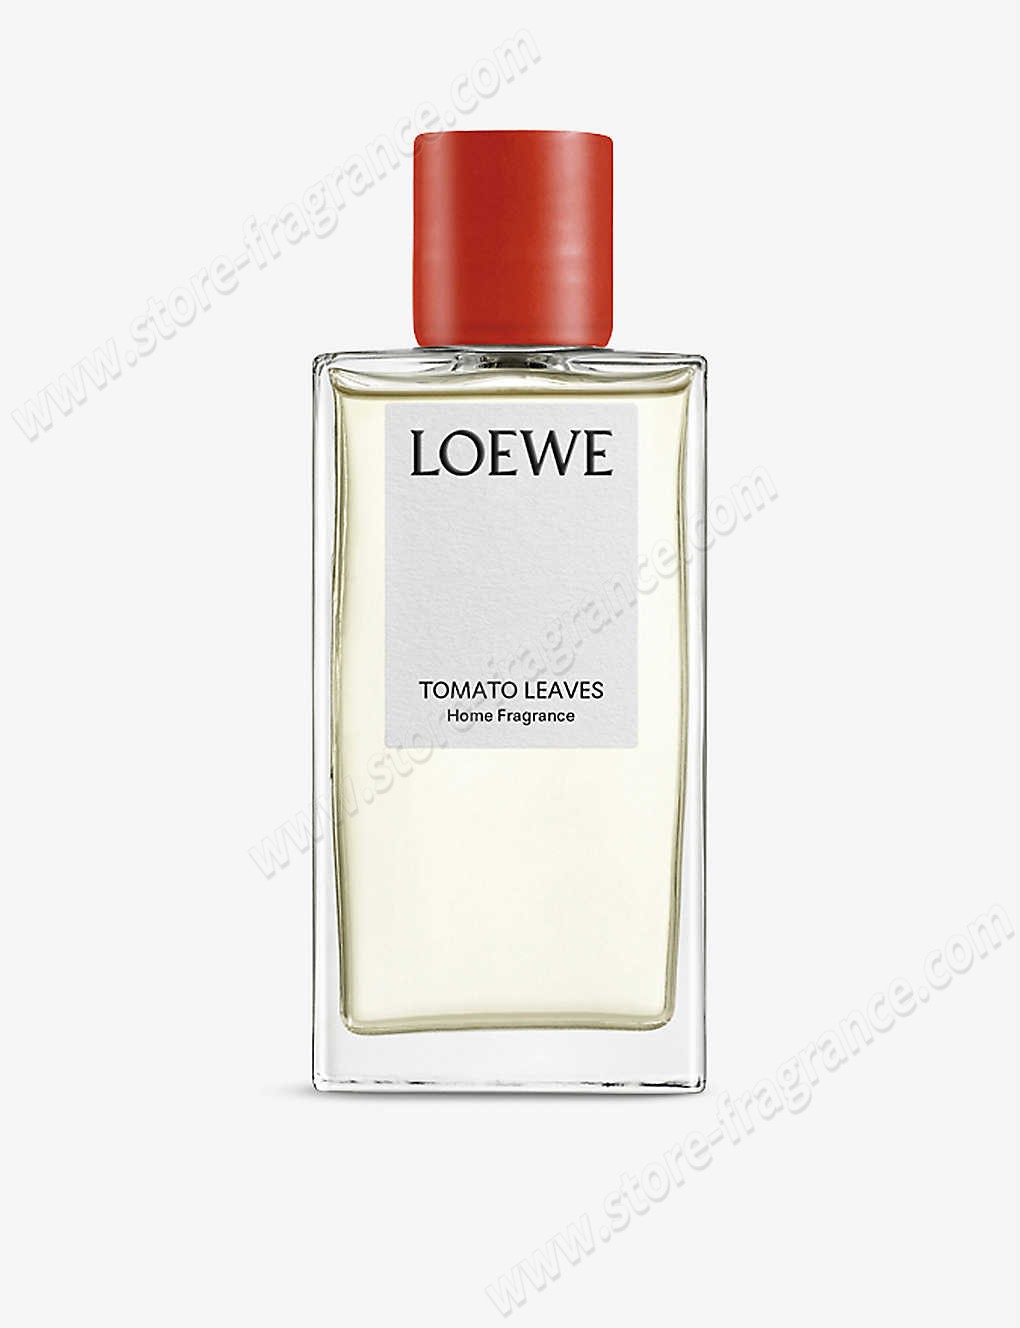 LOEWE/Tomato Leaves room spray 150ml ✿ Discount Store - LOEWE/Tomato Leaves room spray 150ml ✿ Discount Store